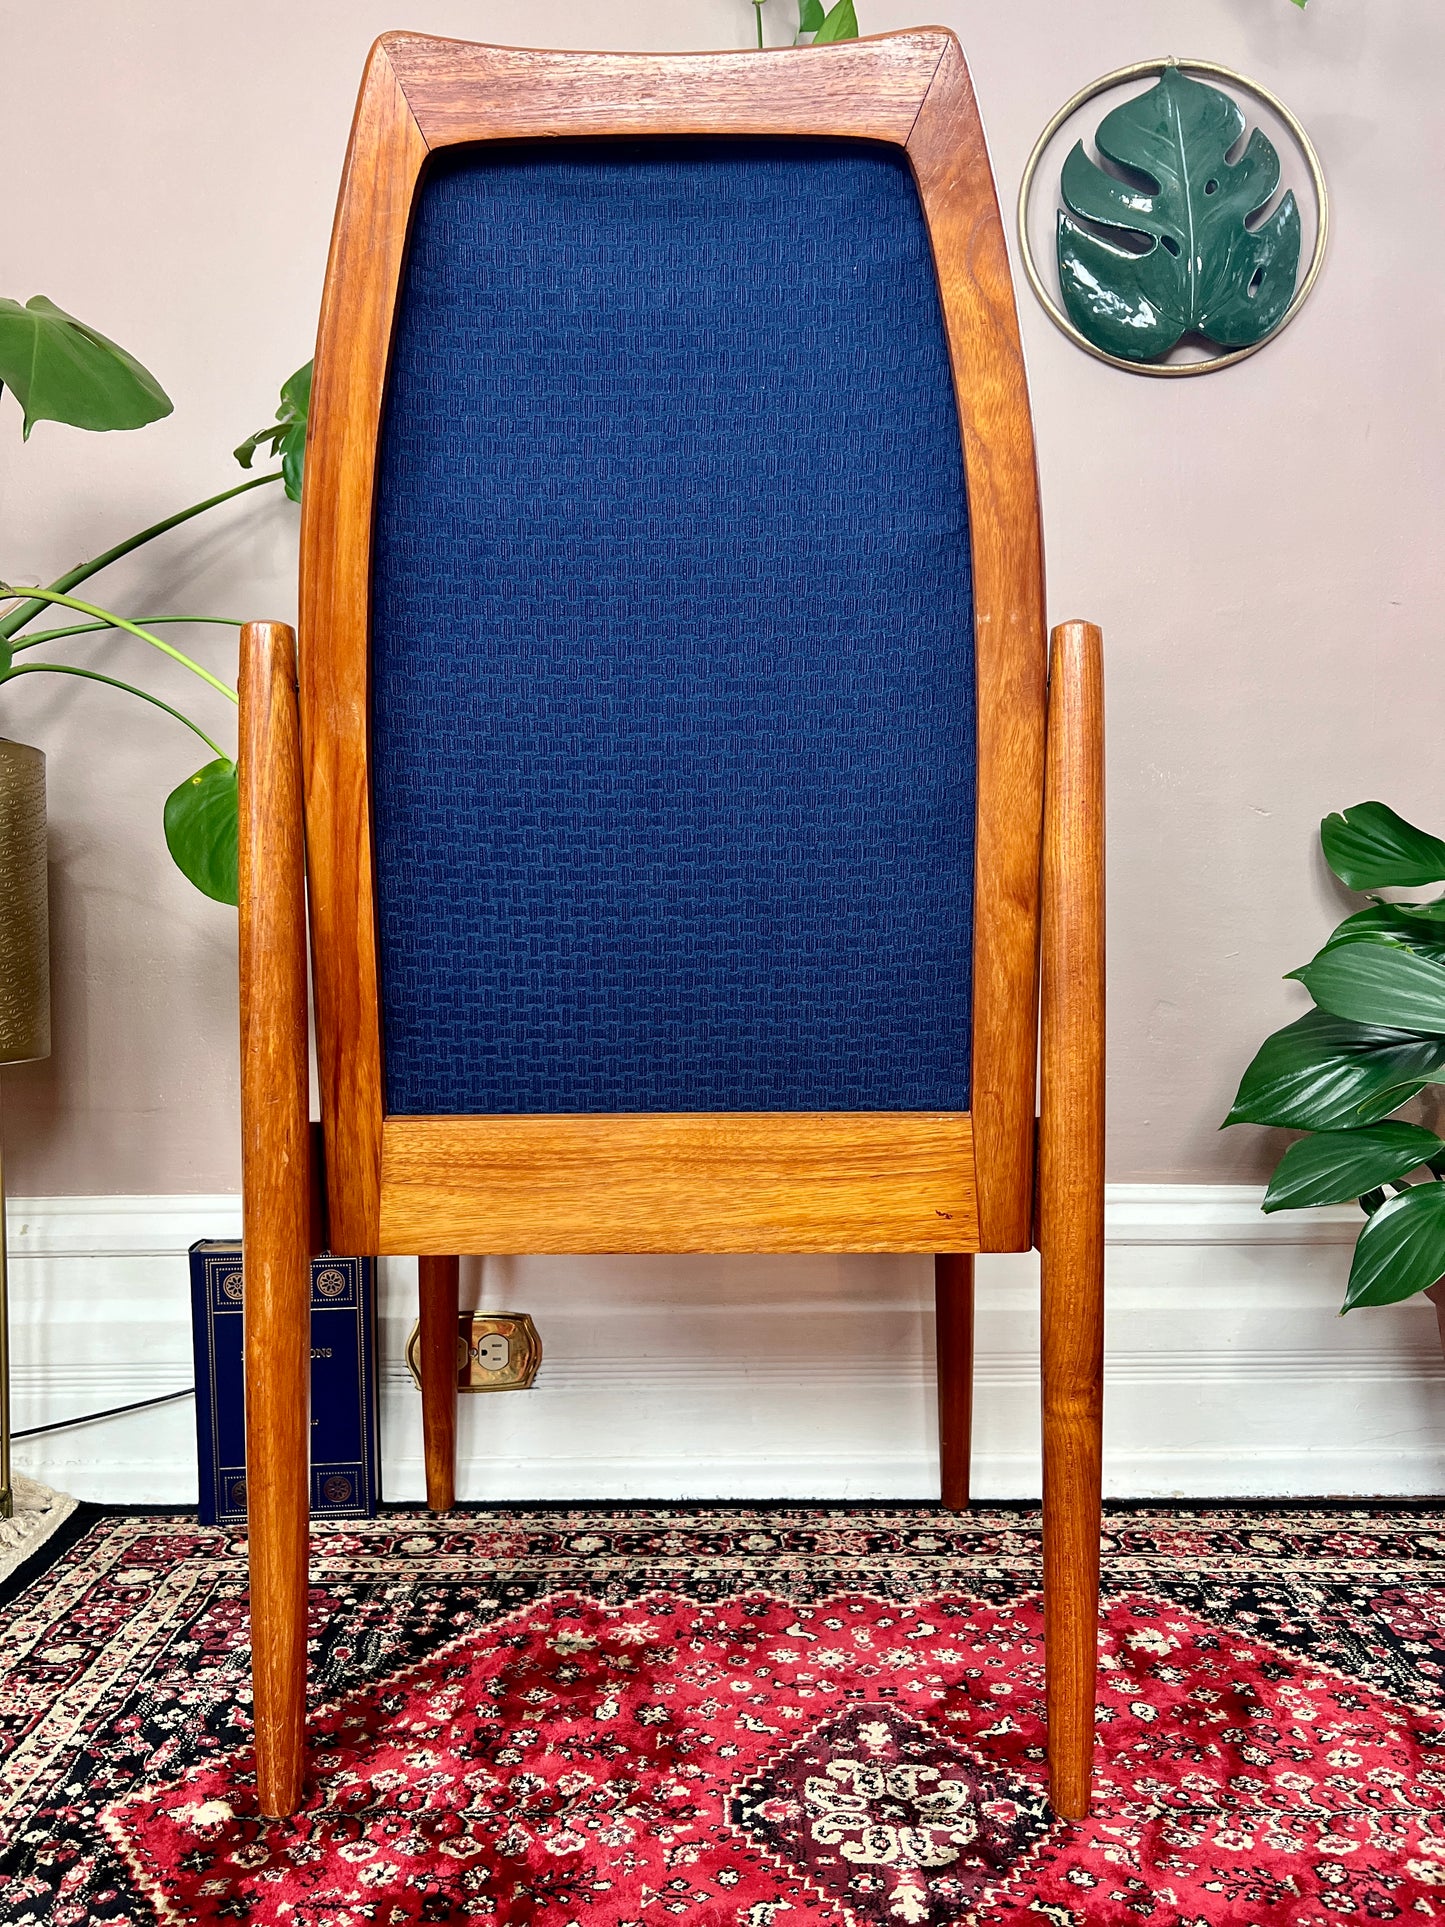 The Saint Tropaz Teak Chairs